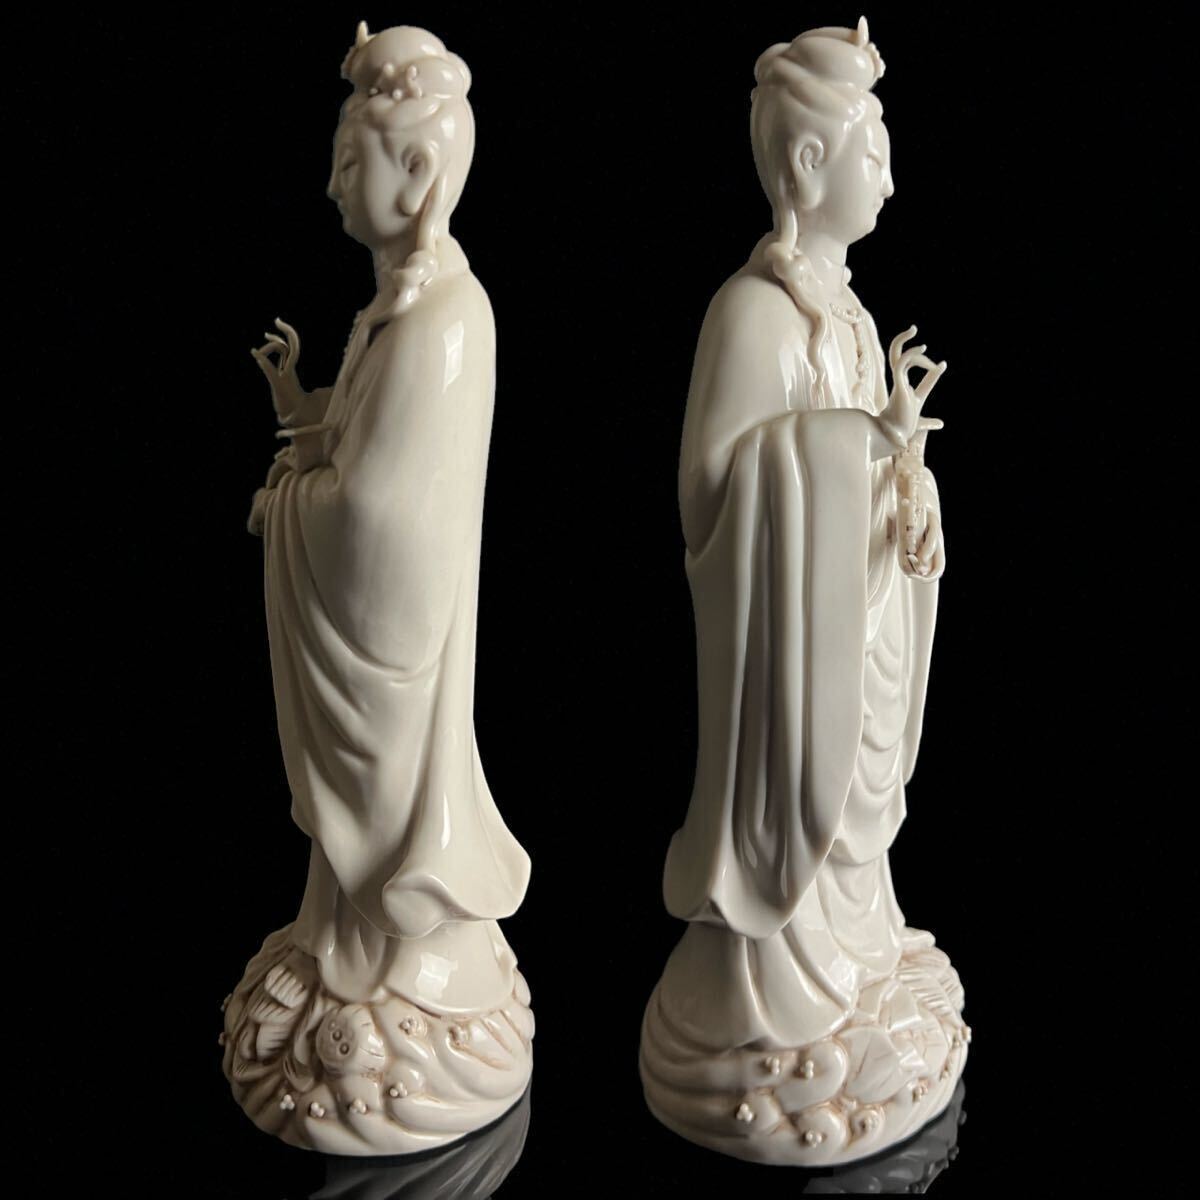 *.* China old . virtue . kiln white porcelain made . sound bodhisattva image 25.5cm super ... small . skill Buddhism fine art Tang thing antique 